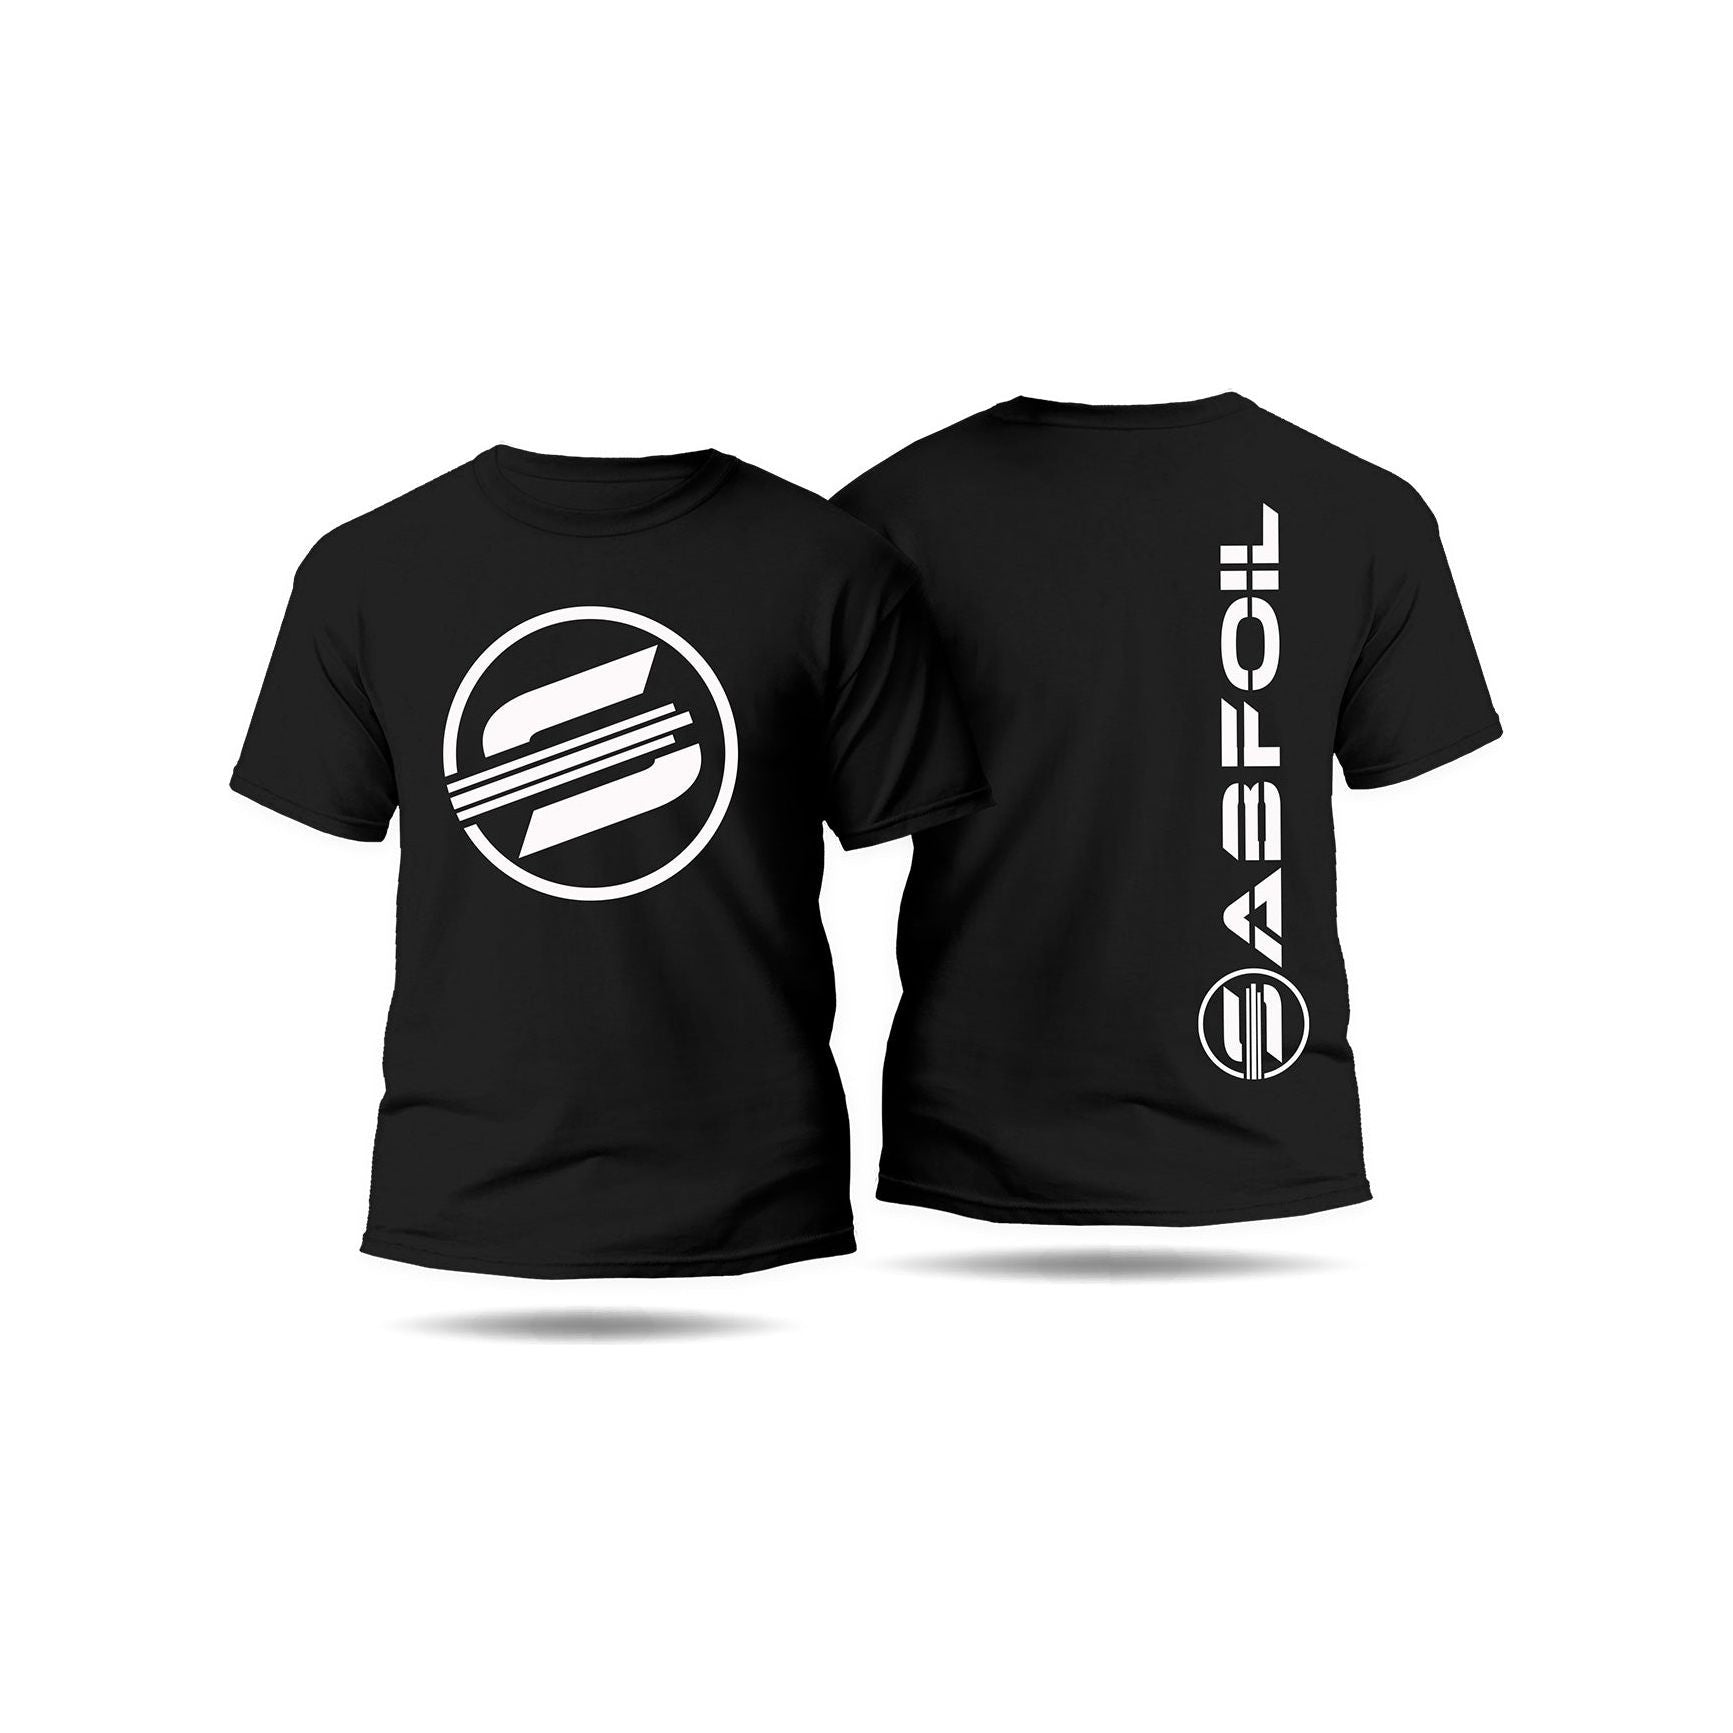 Black Sabfoil T-shirt - size XXL